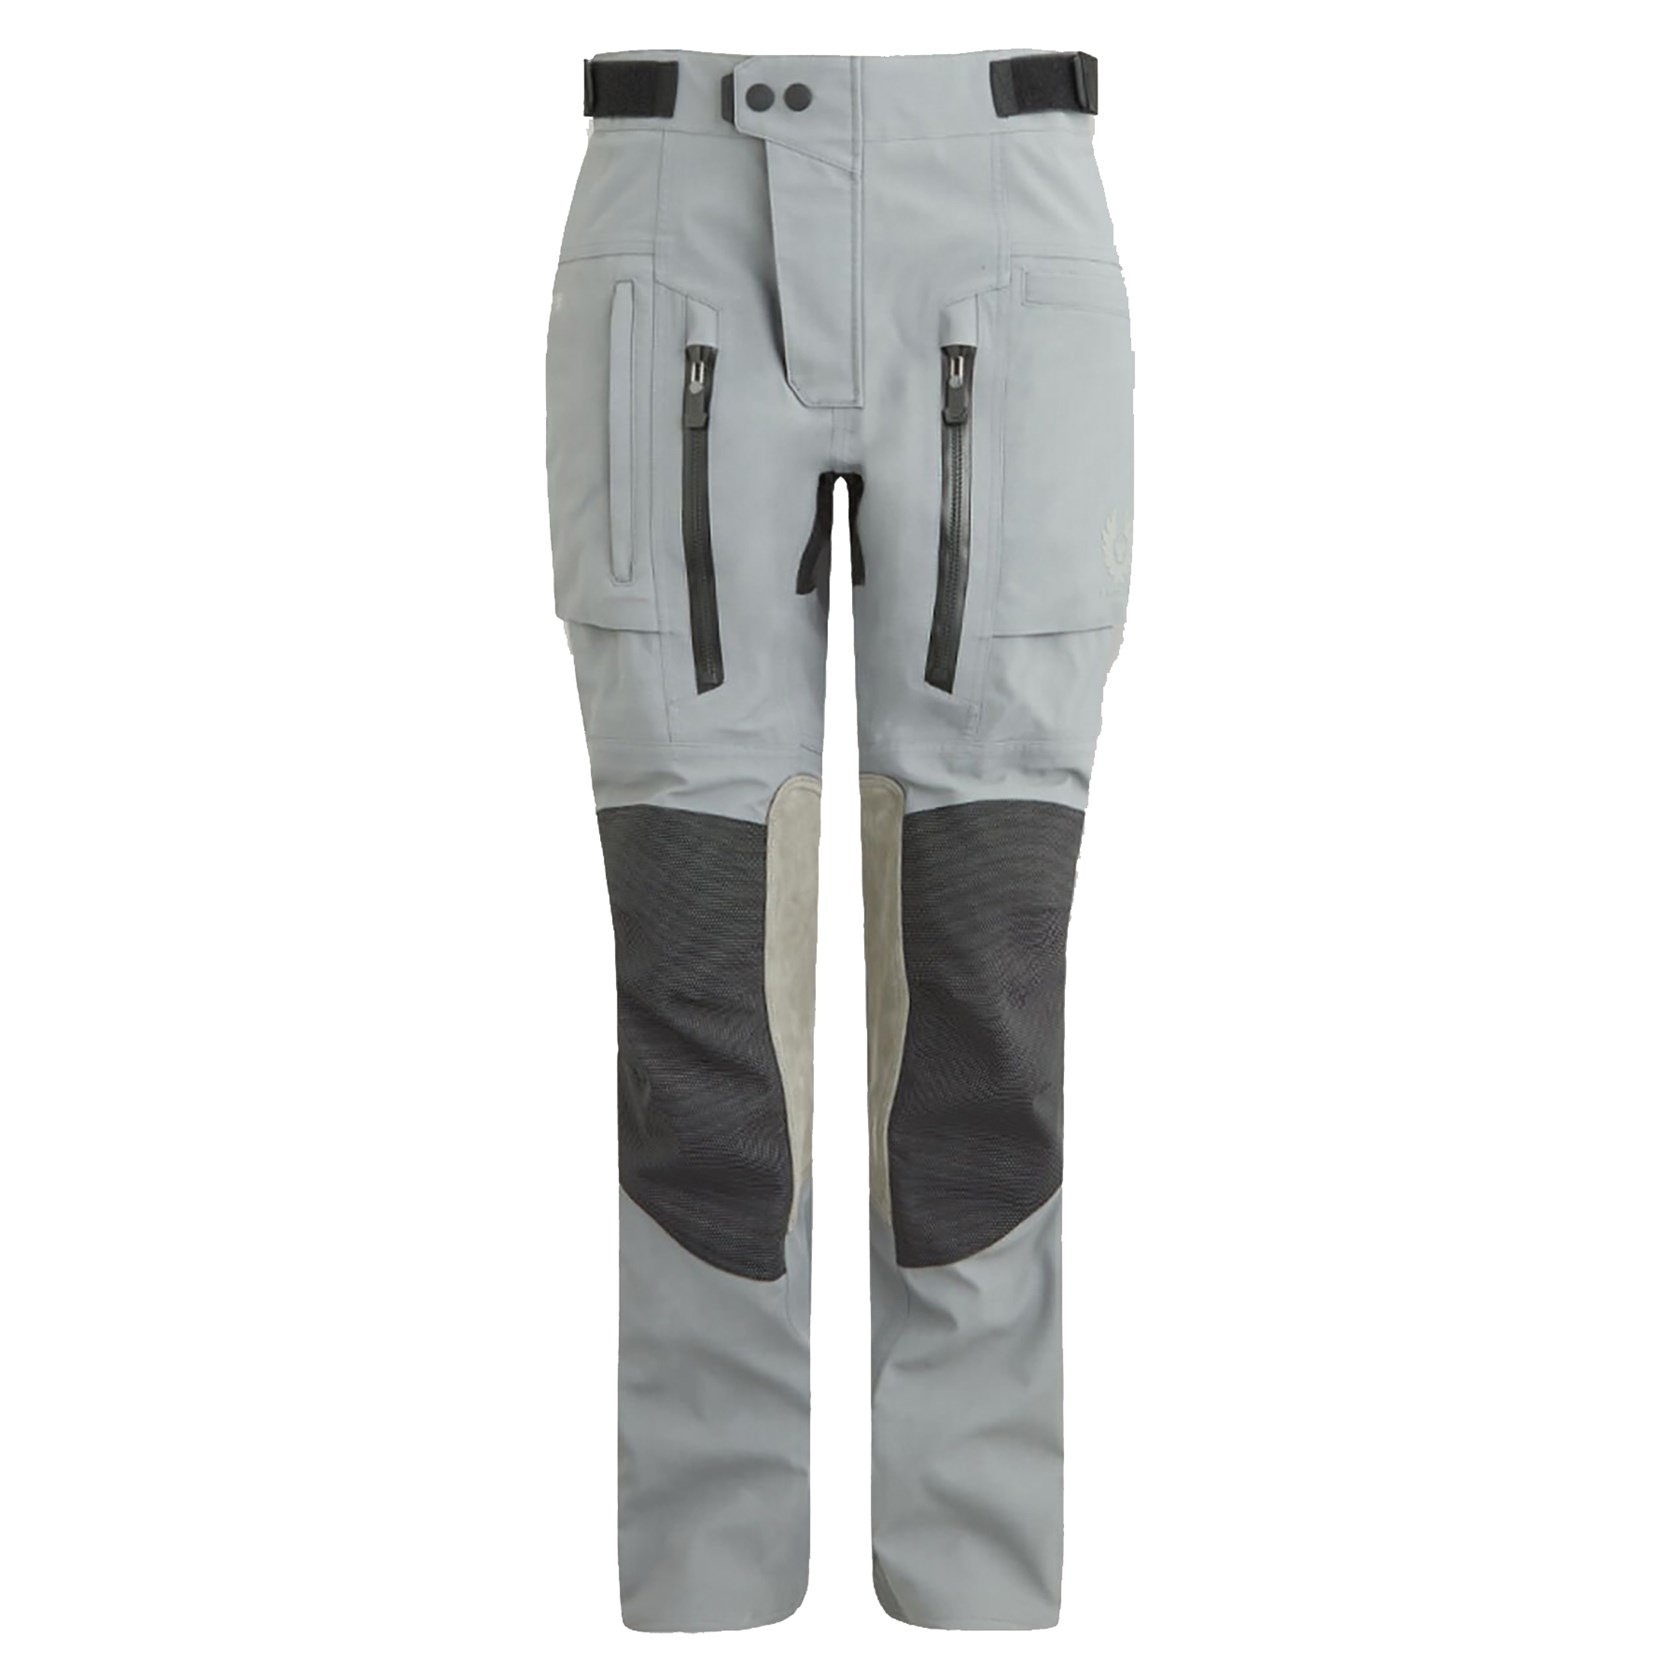 Belstaff Long Up pants in light grey